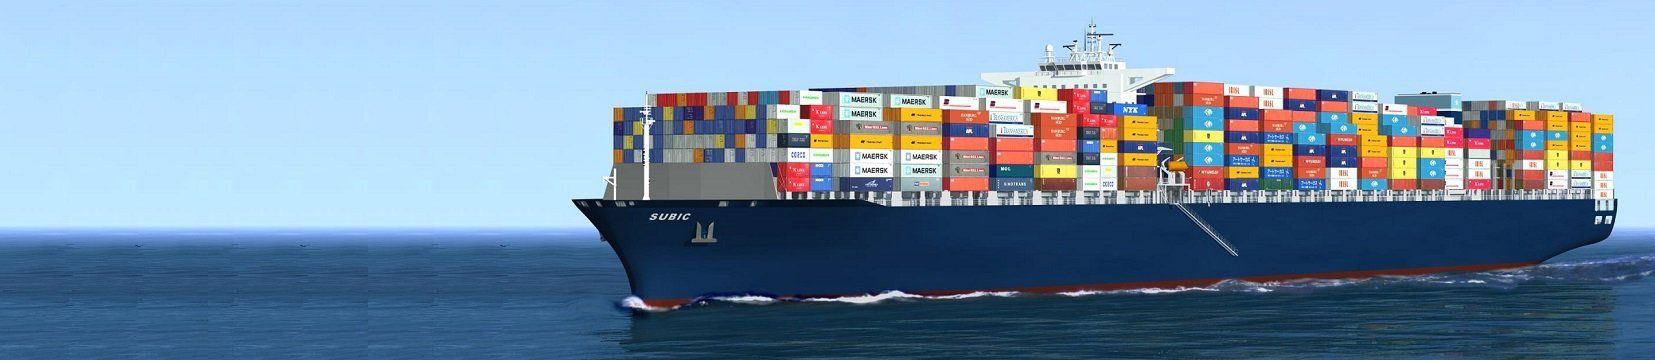 Envio de contenedores a Perú, Envio de containers de España a Peru, transporte maritimo de carga y mercancias a Perú y España, exportar o exportaciones a PERÚ